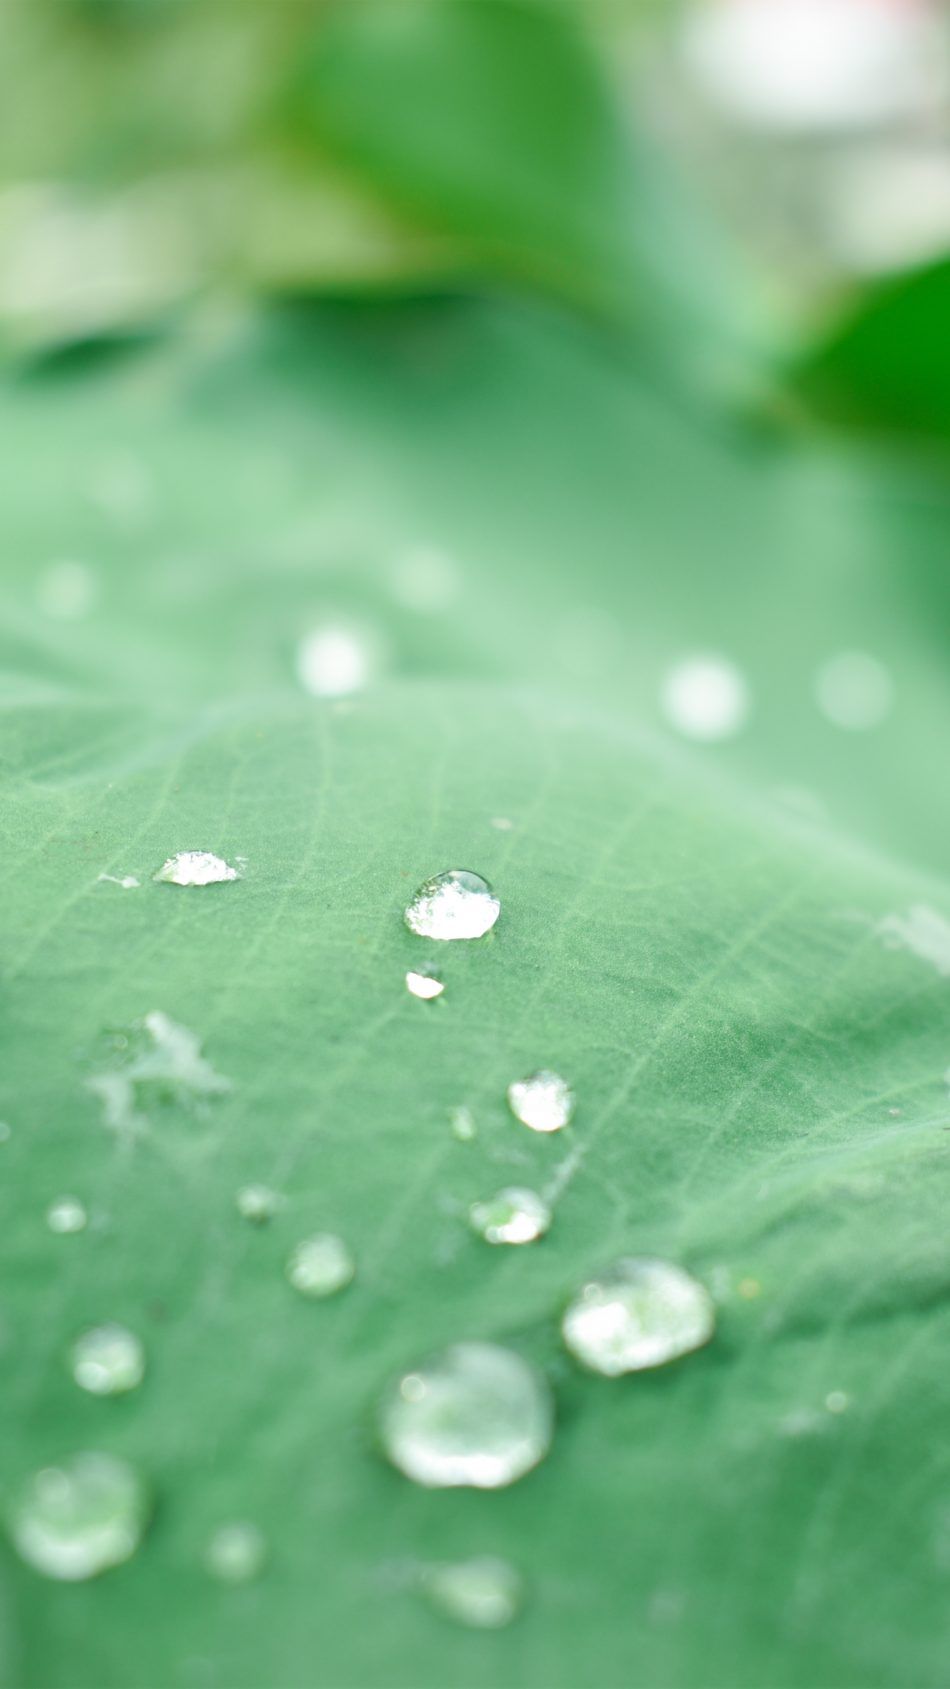 Leaf Water Drops Morning 4k Ultra HD Mobile Wallpaper Wallpaper HD For Mobile